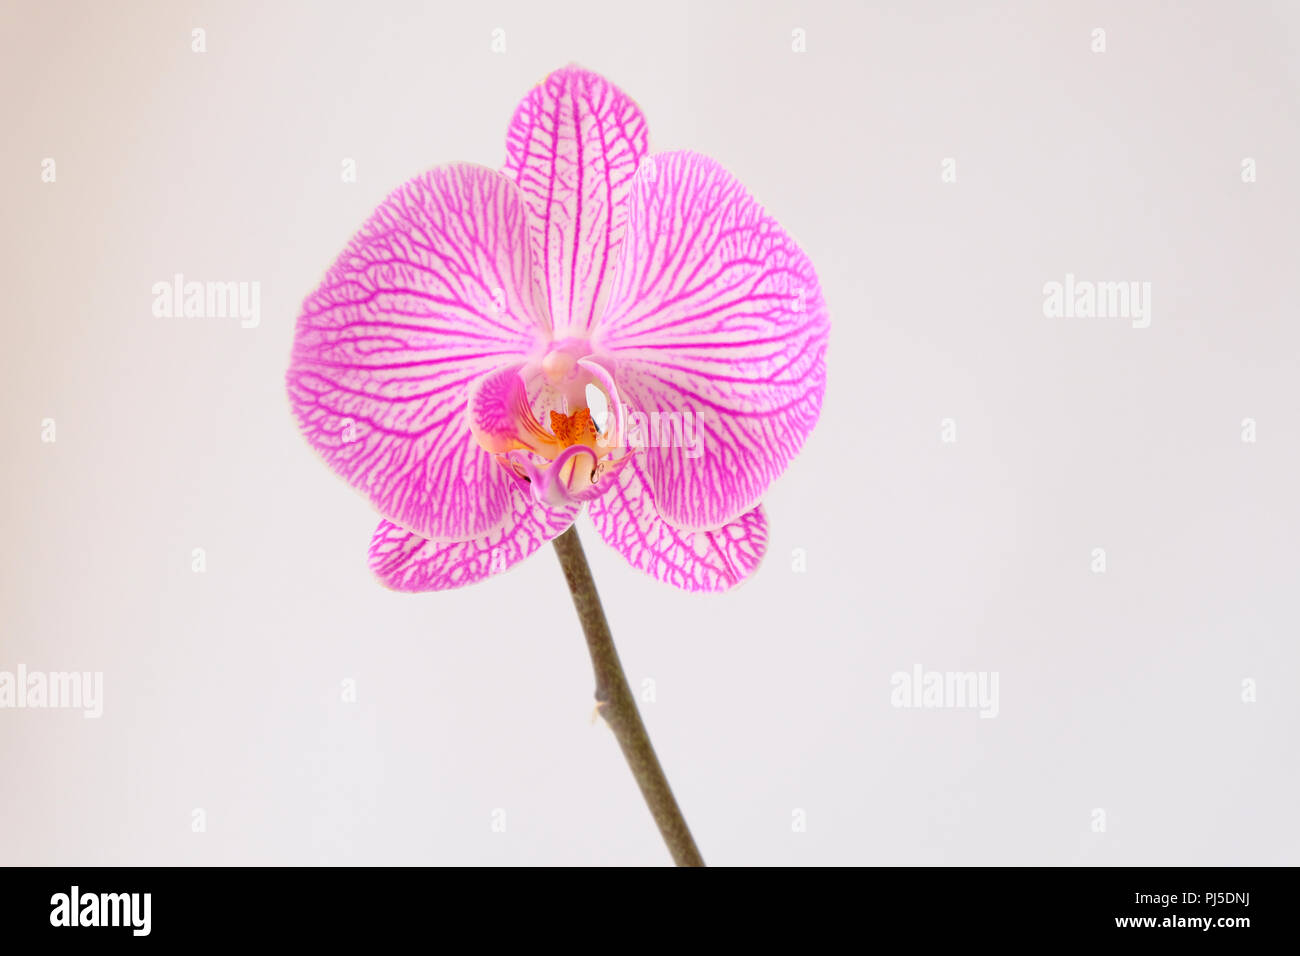 Single Phalaenopsis Orchid flower against a plain white background Stock Photo